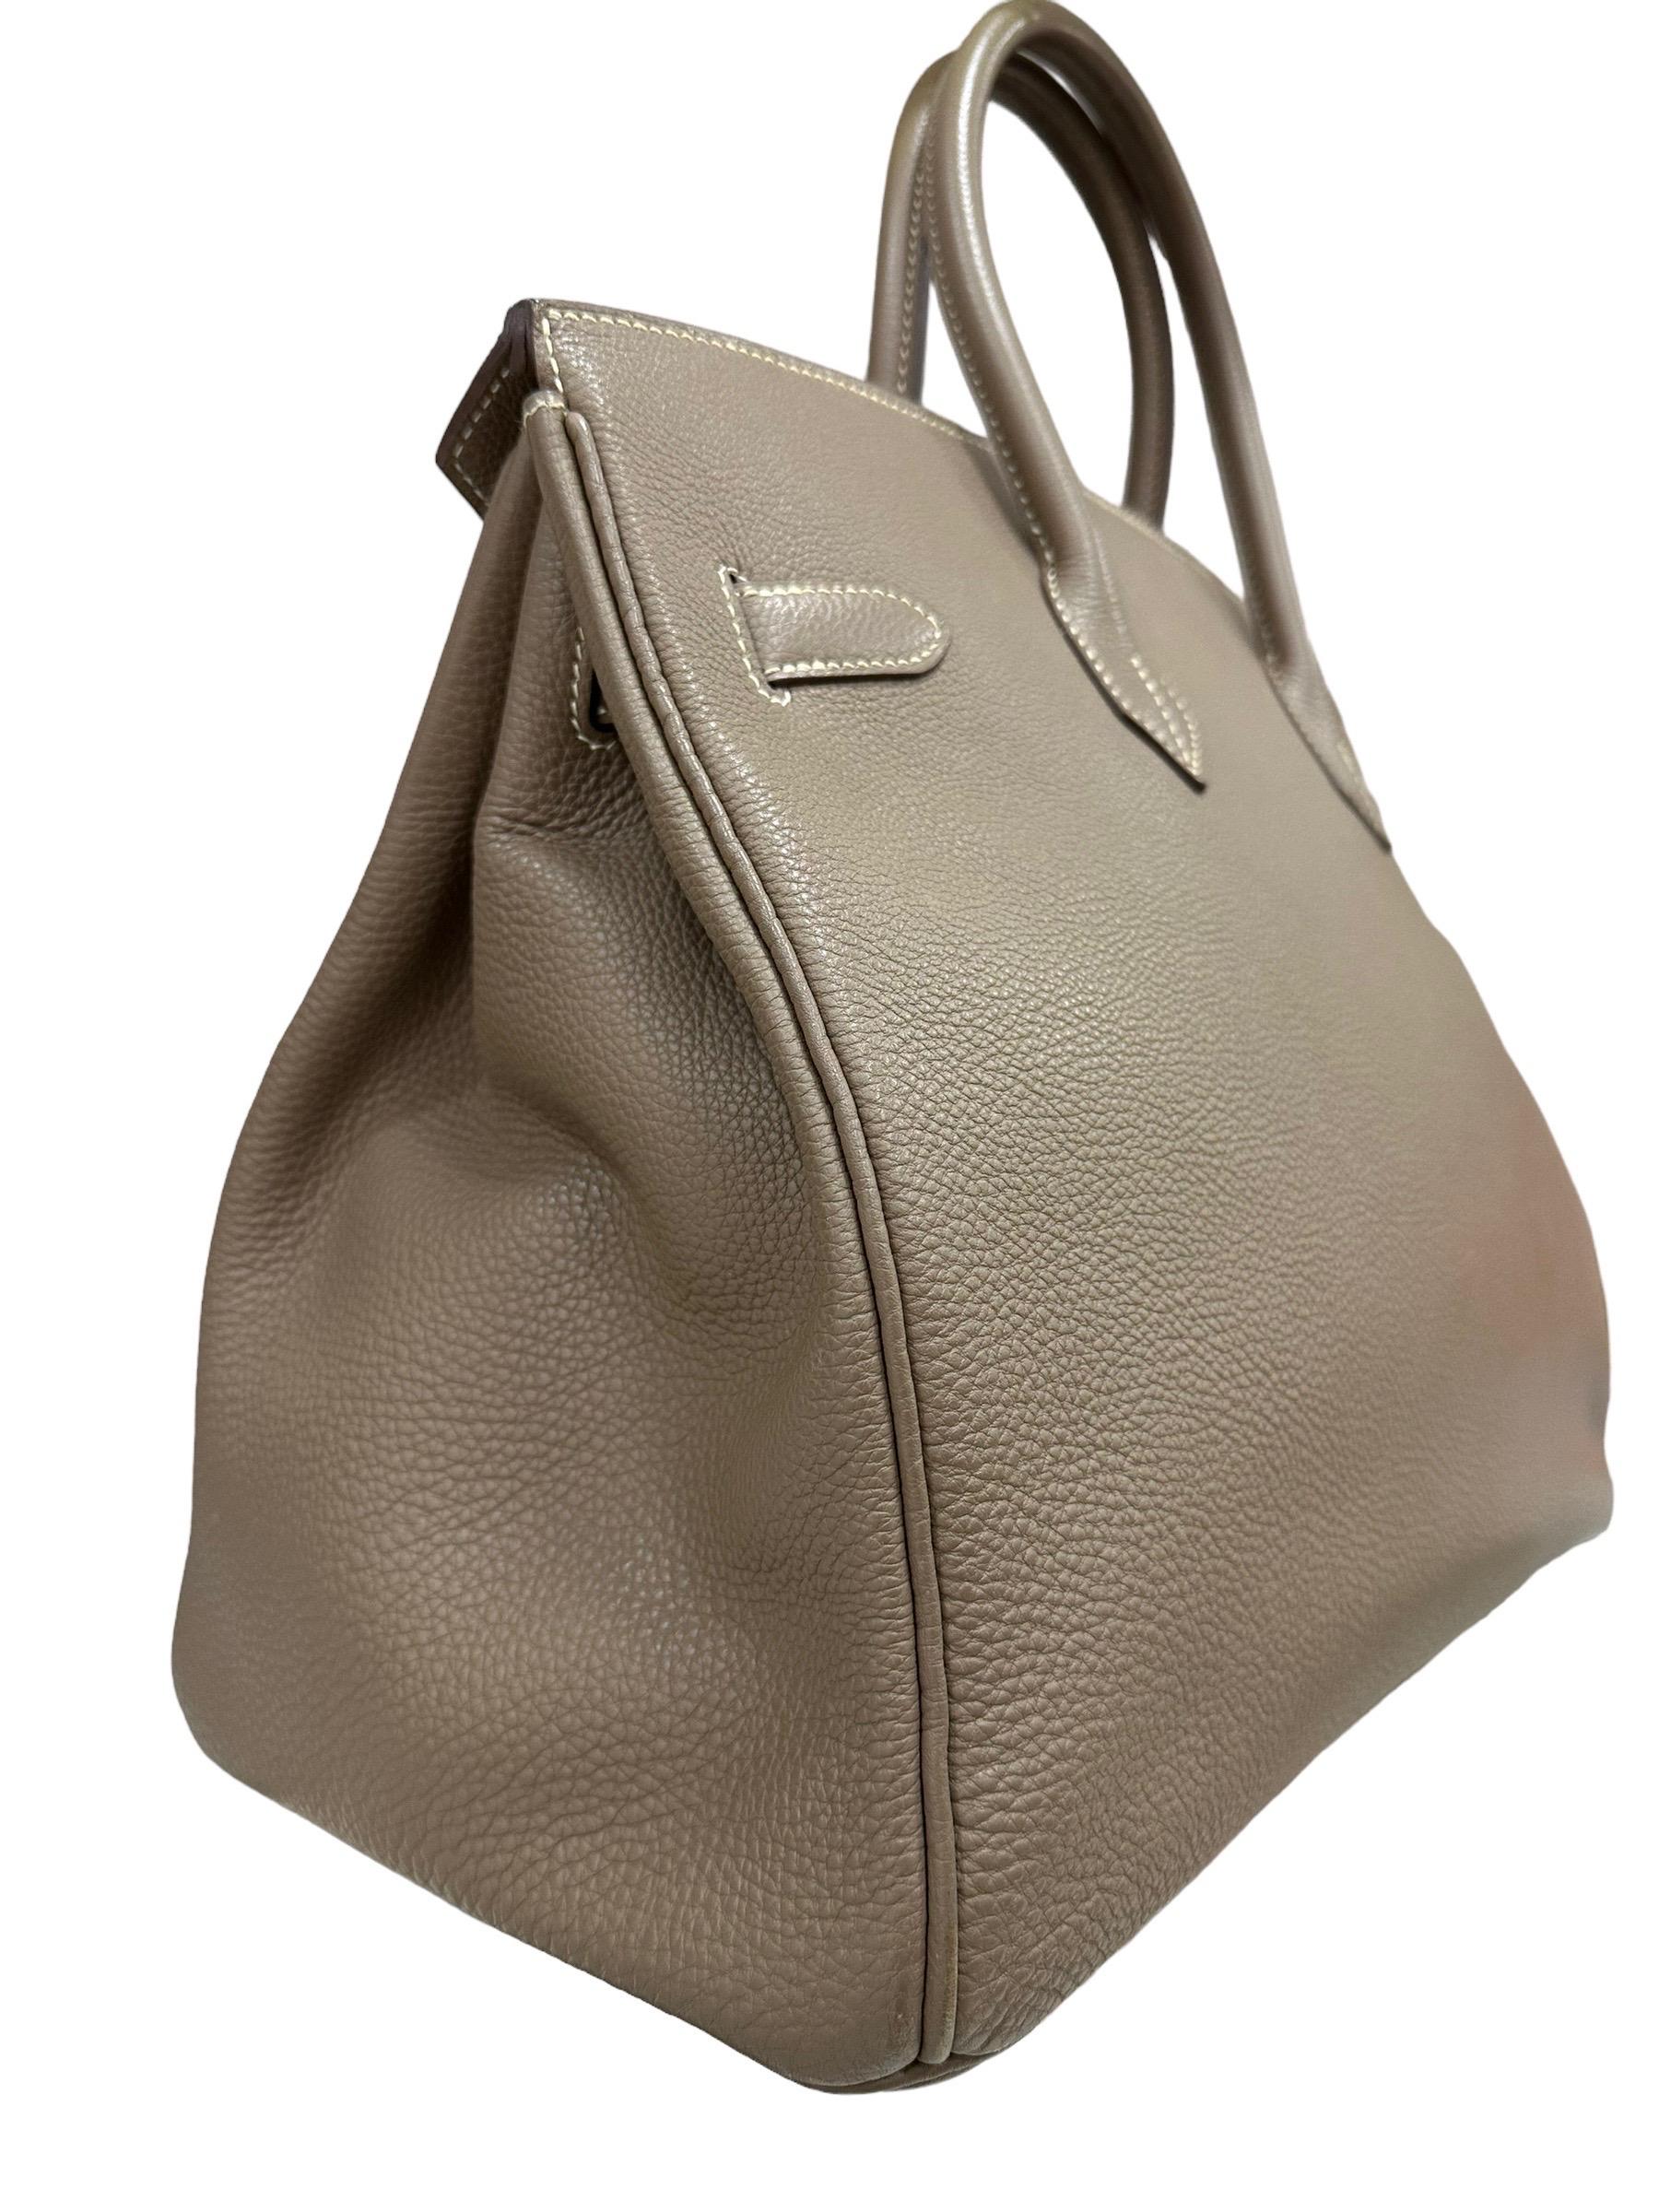 Gray 2008 Hermès Birkin 35 Togo Leather Toundra Top Handle Bag For Sale